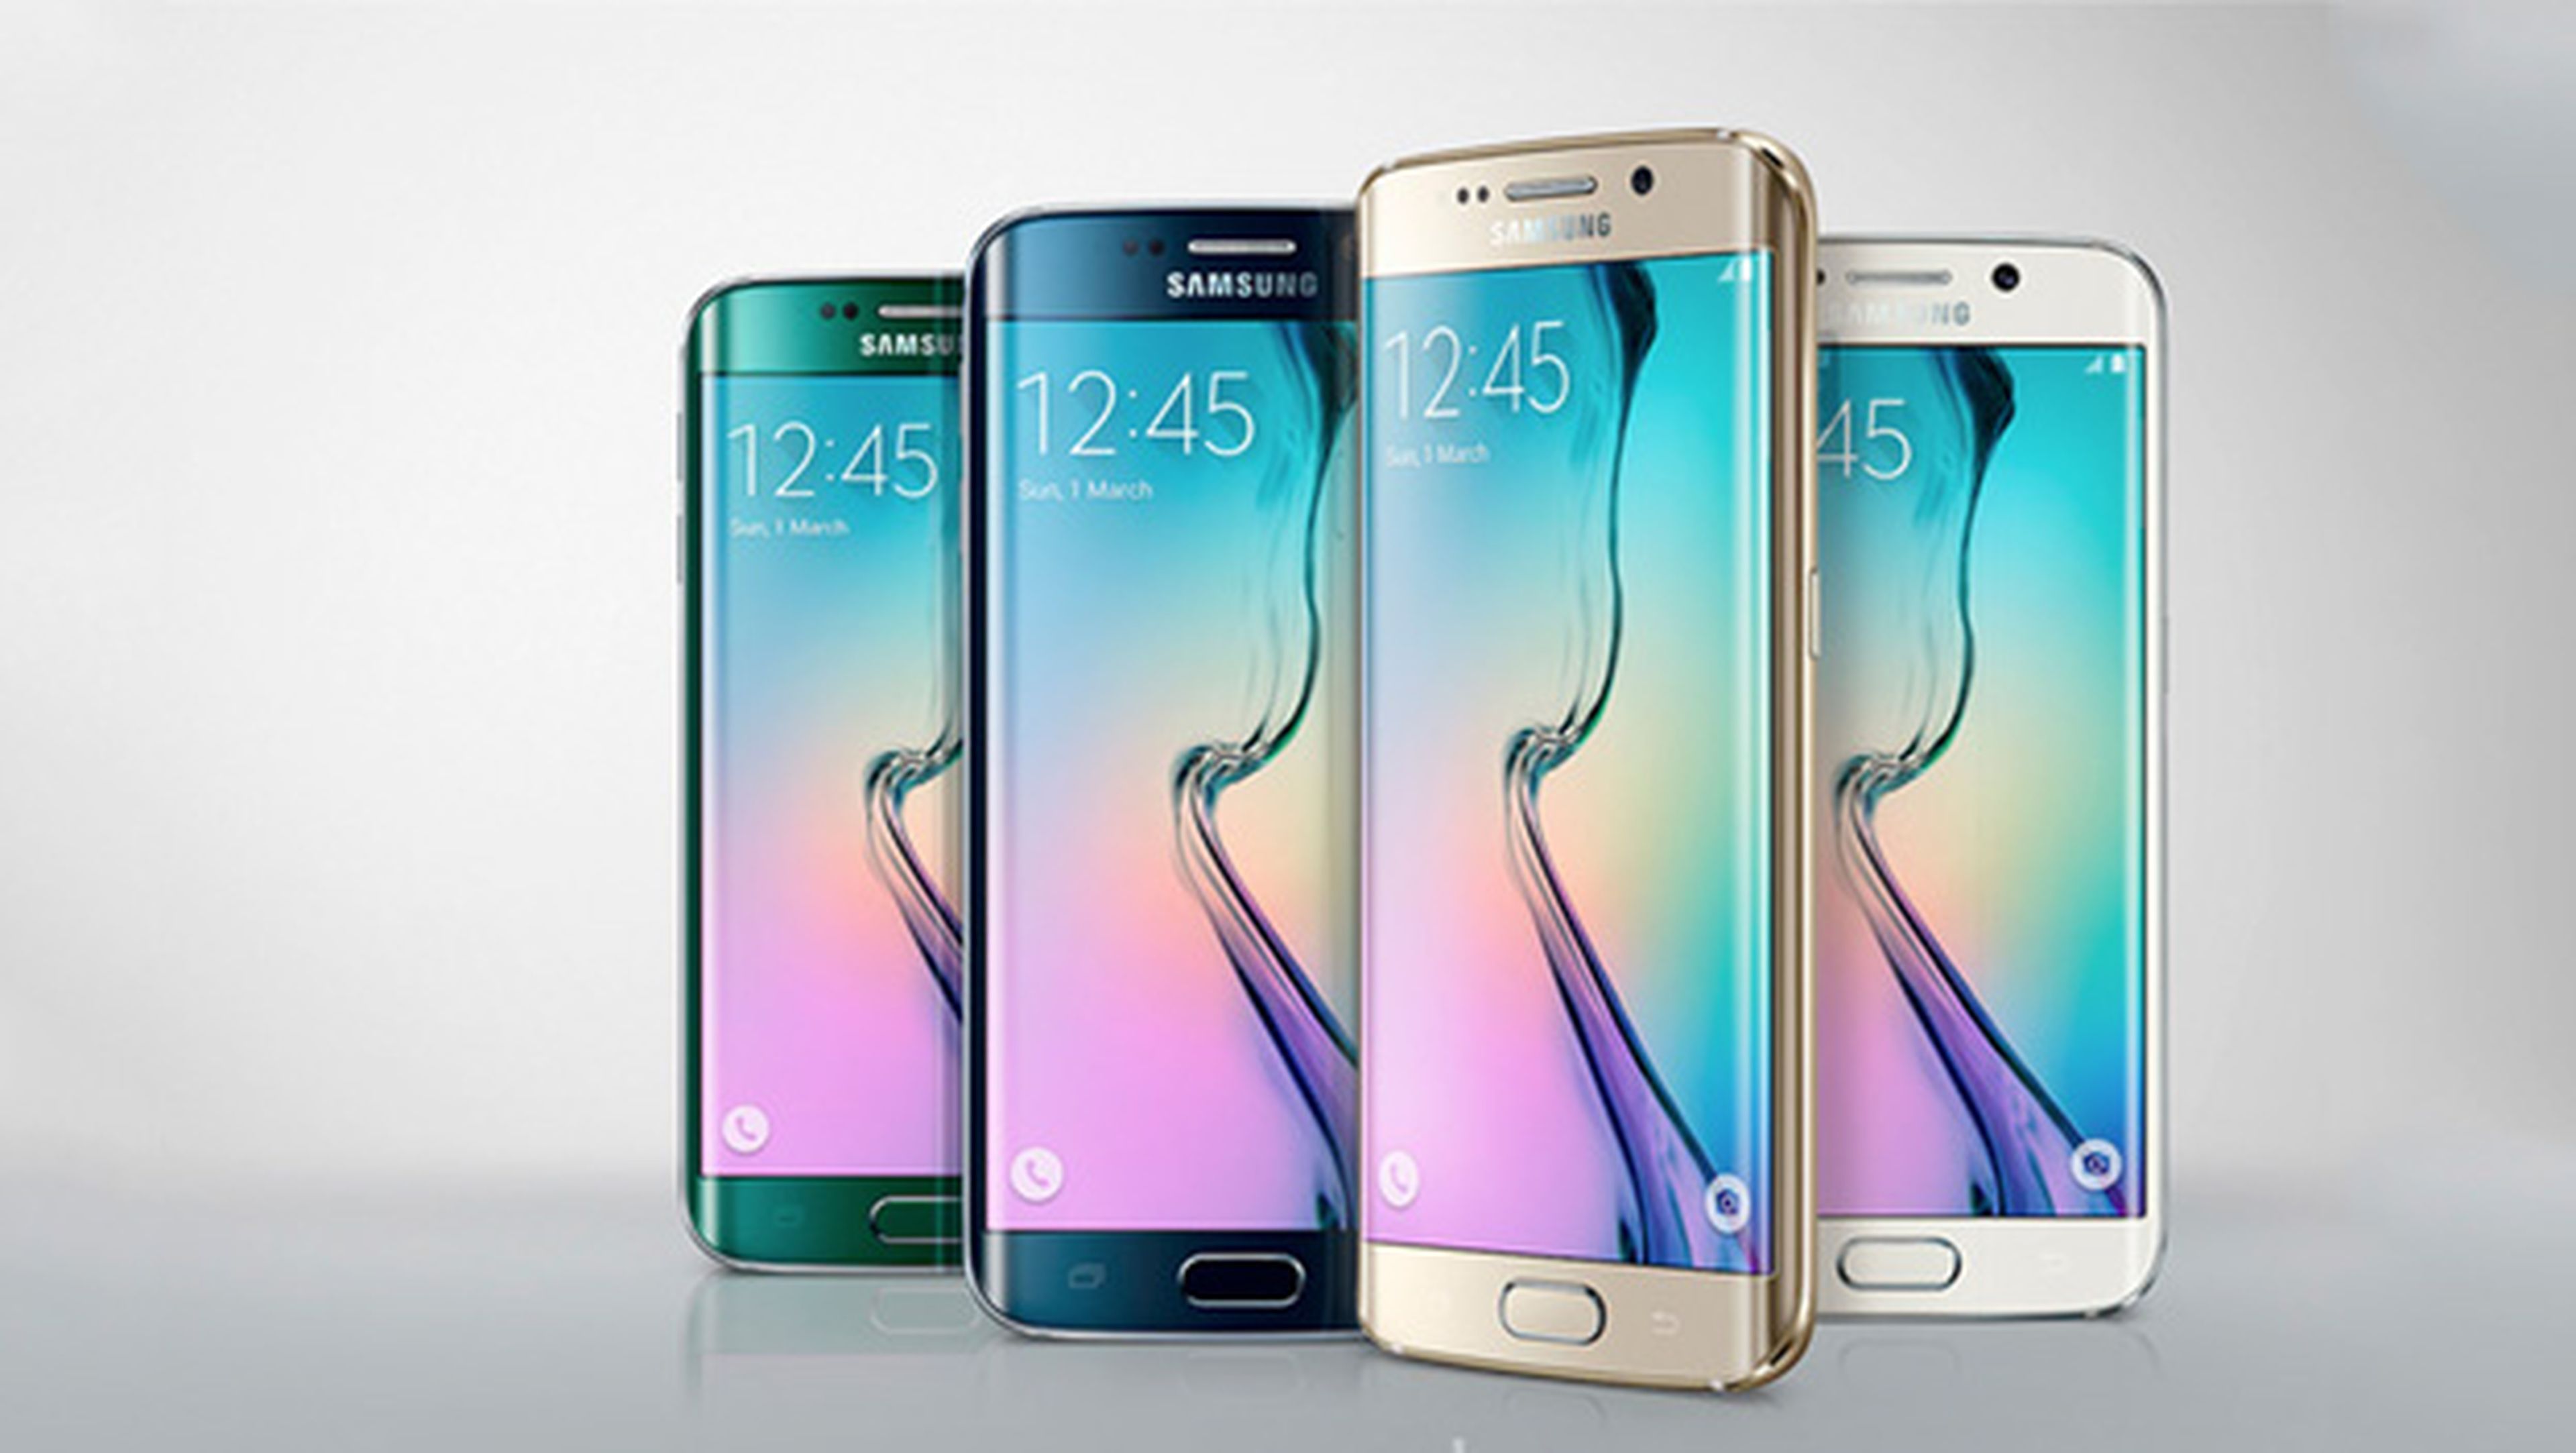 Samsung galaxy new. Samsung s6. Samsung g925f Galaxy s6 Edge. Samsung Galaxy (SM-g925) s6 Edge. Samsung s6 2016.